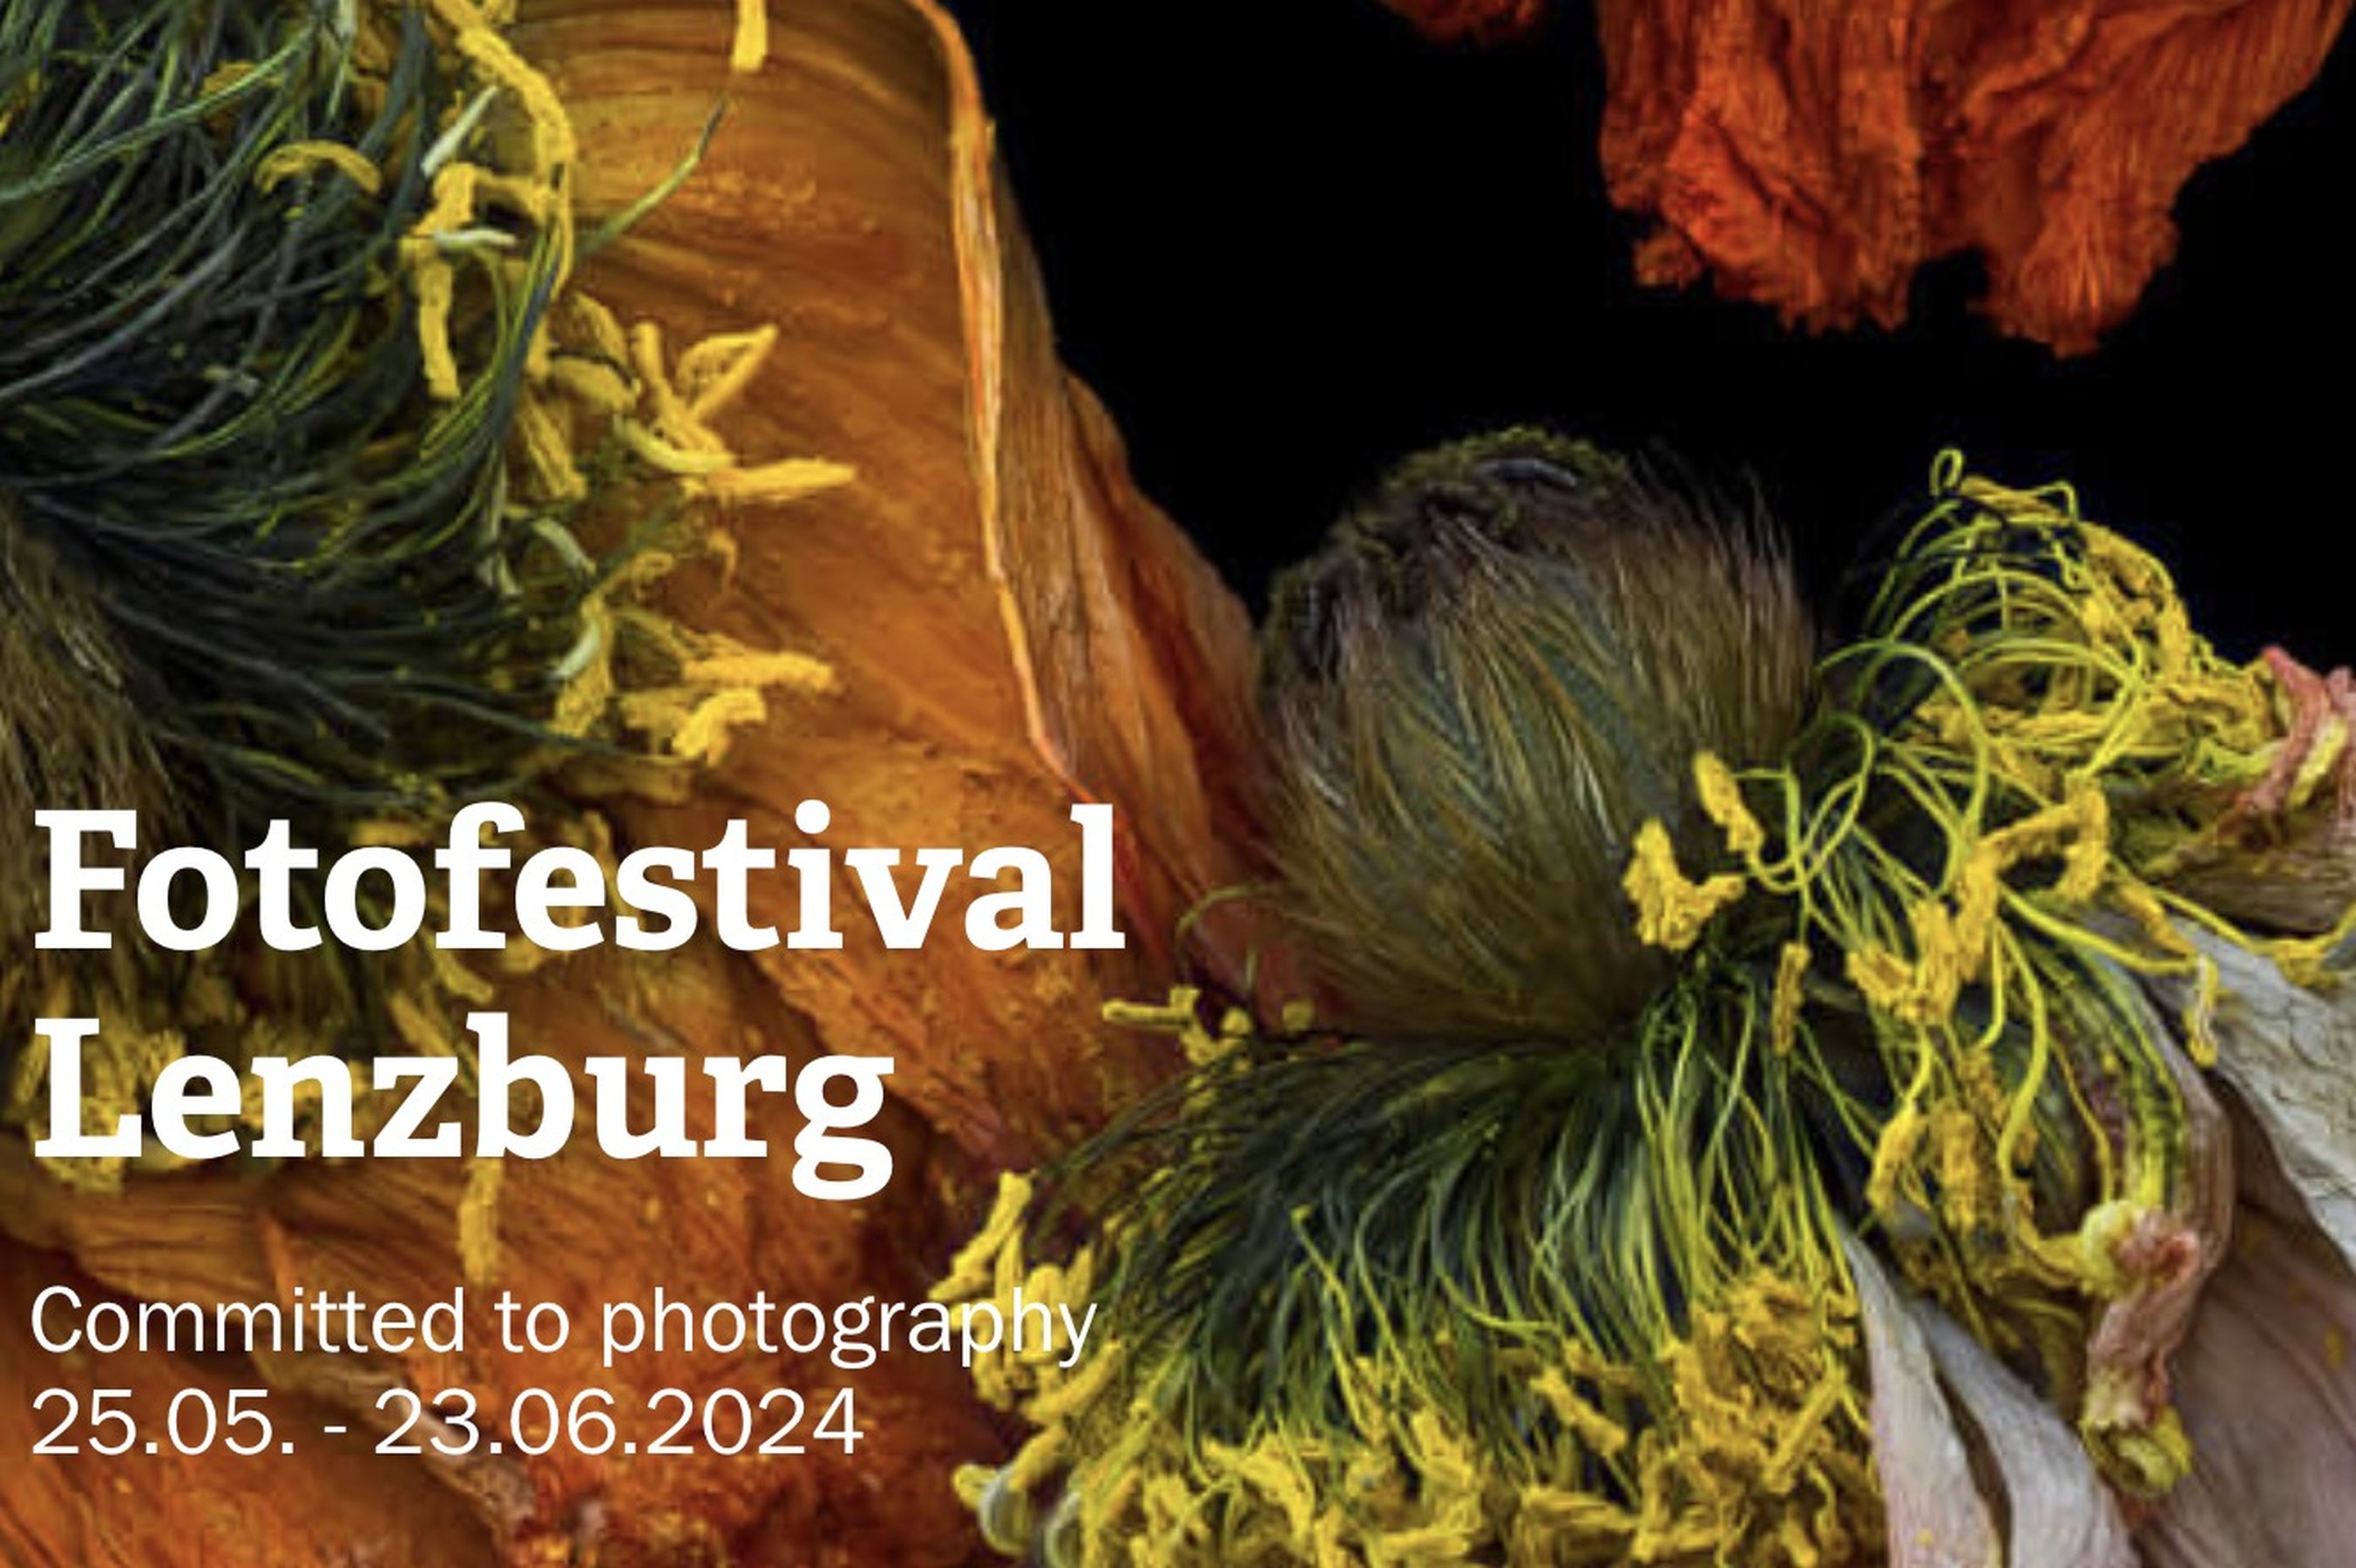 The last supper - Fotofestival Lenzburg